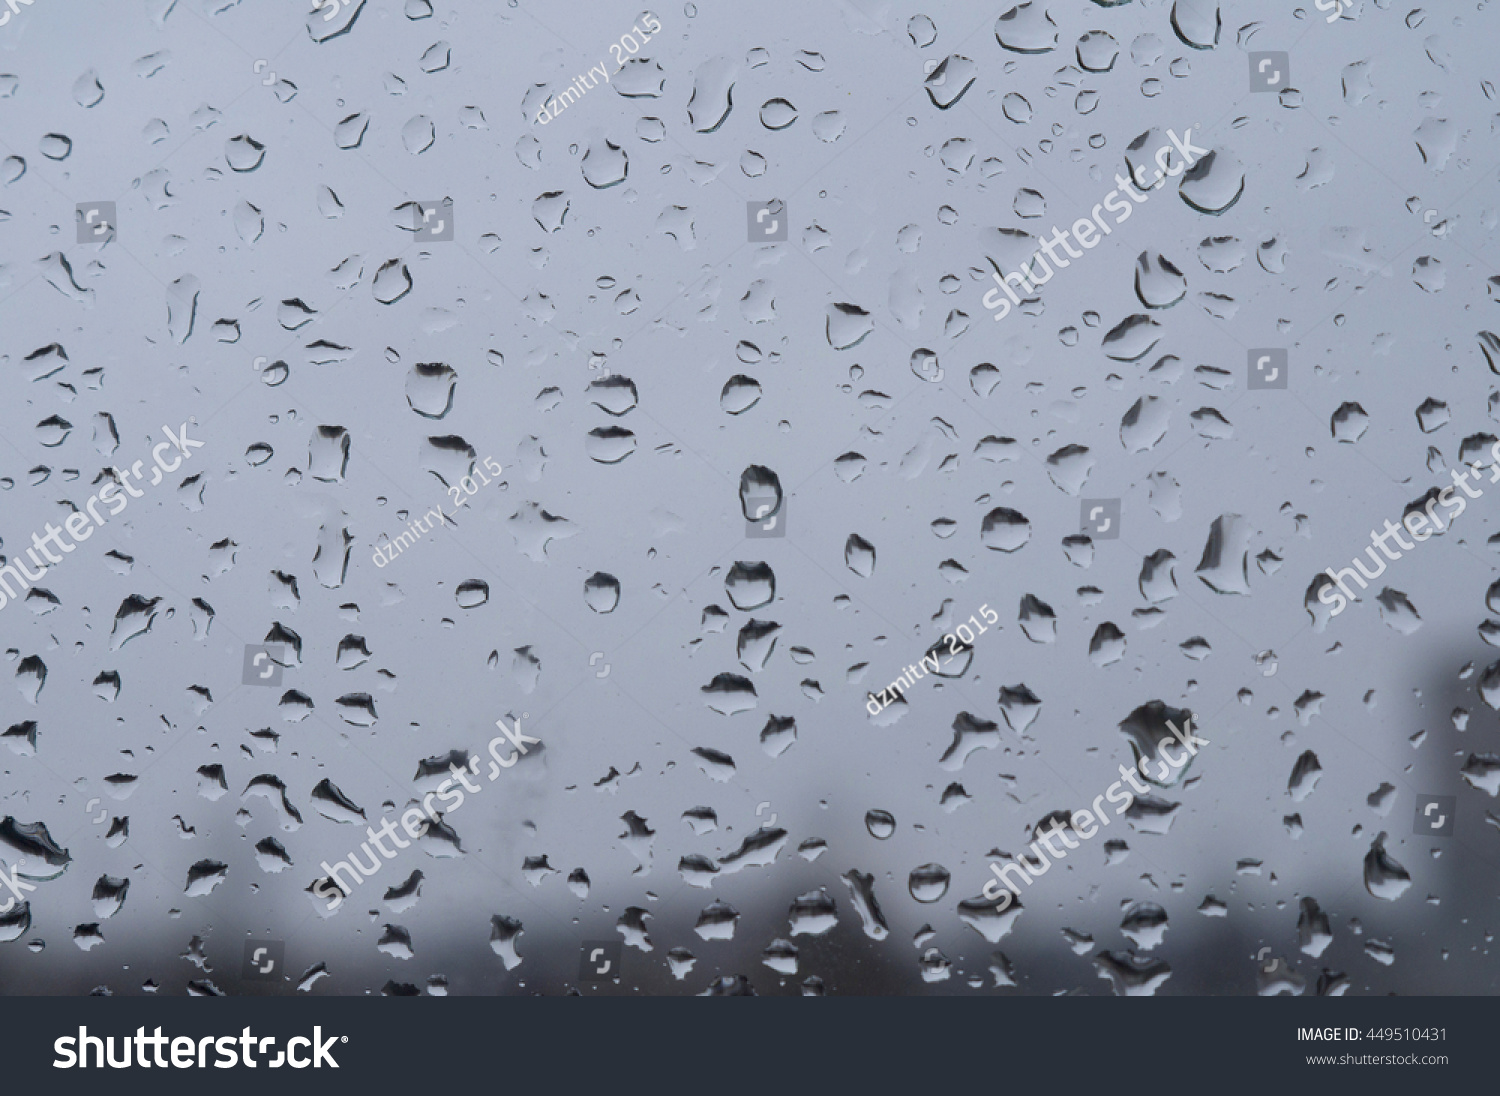 Drops of rain on a window pane #449510431